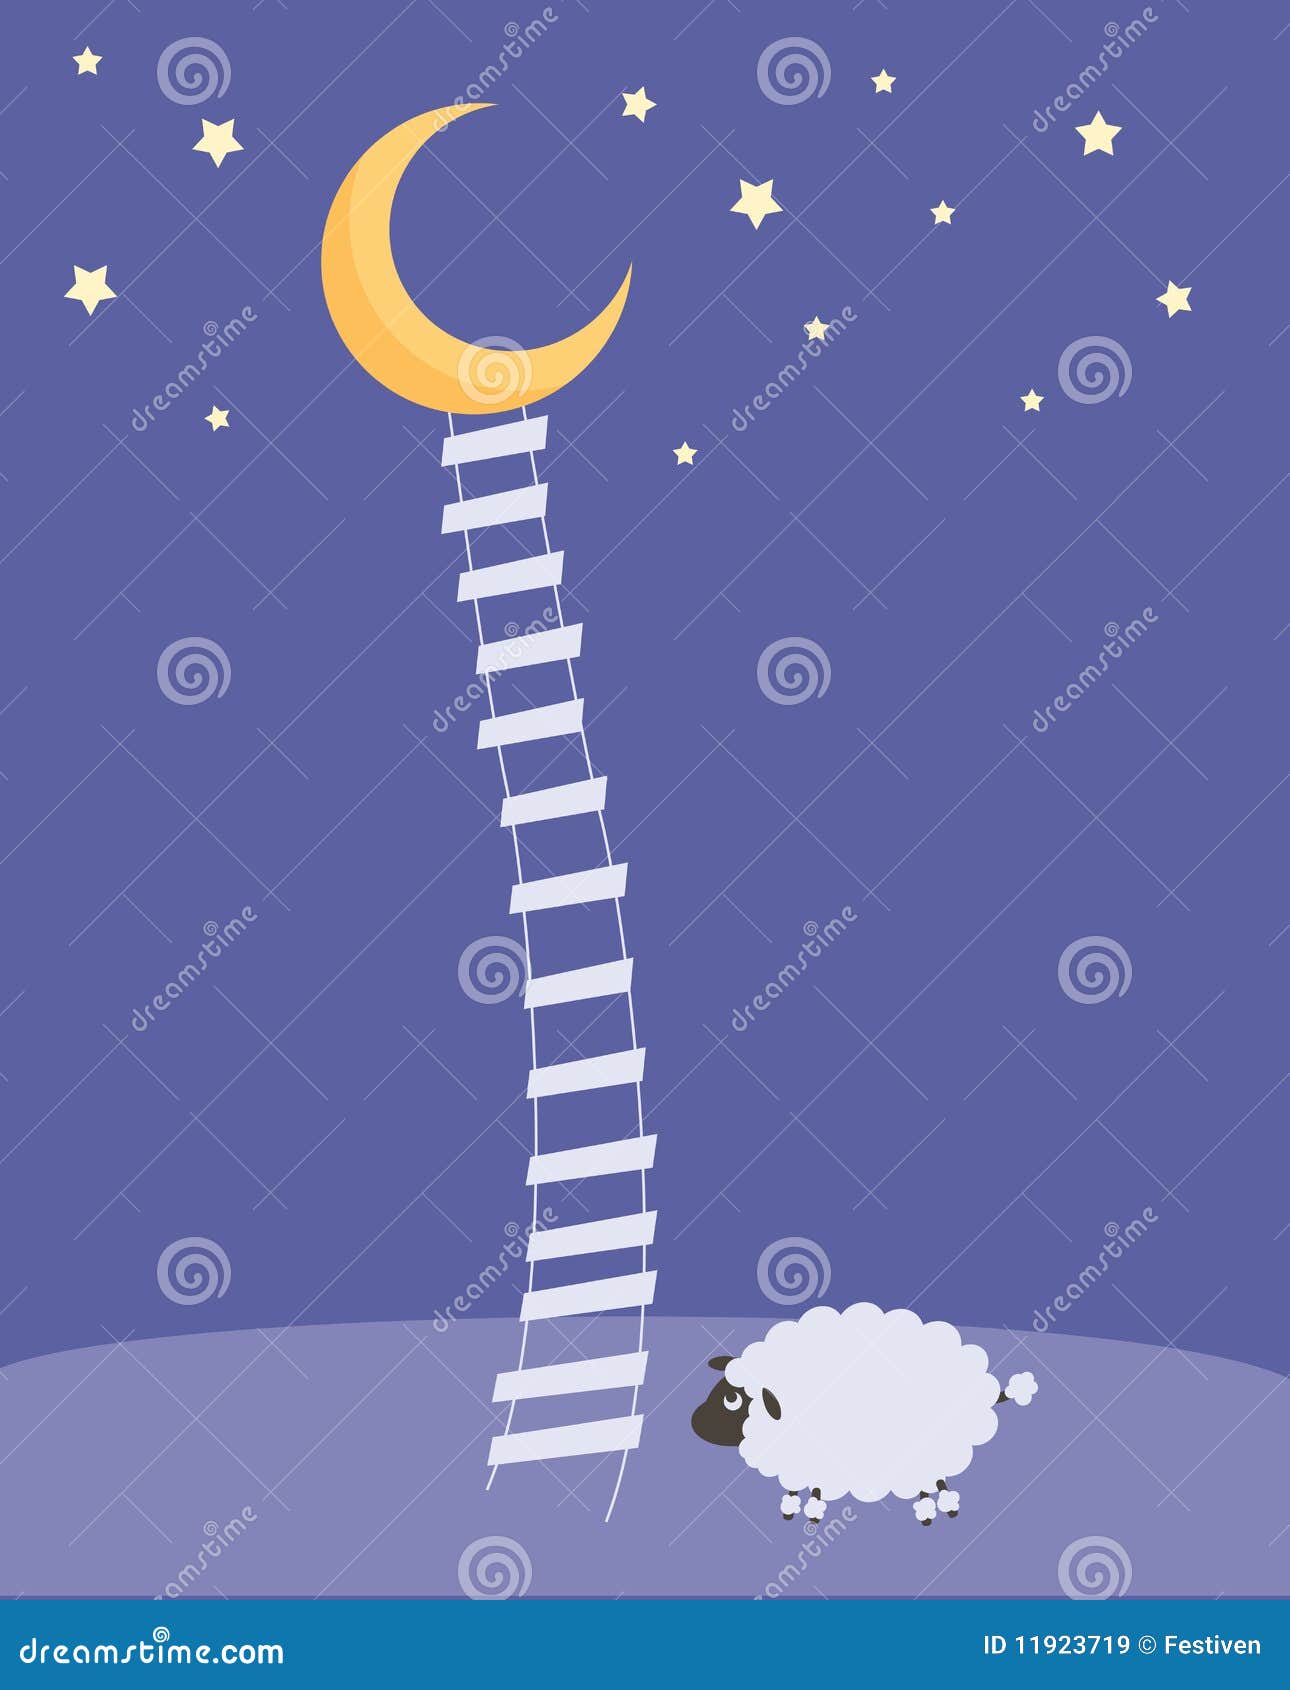 Sweet Dreams stock vector. Illustration of cartoon, moon - 11923719